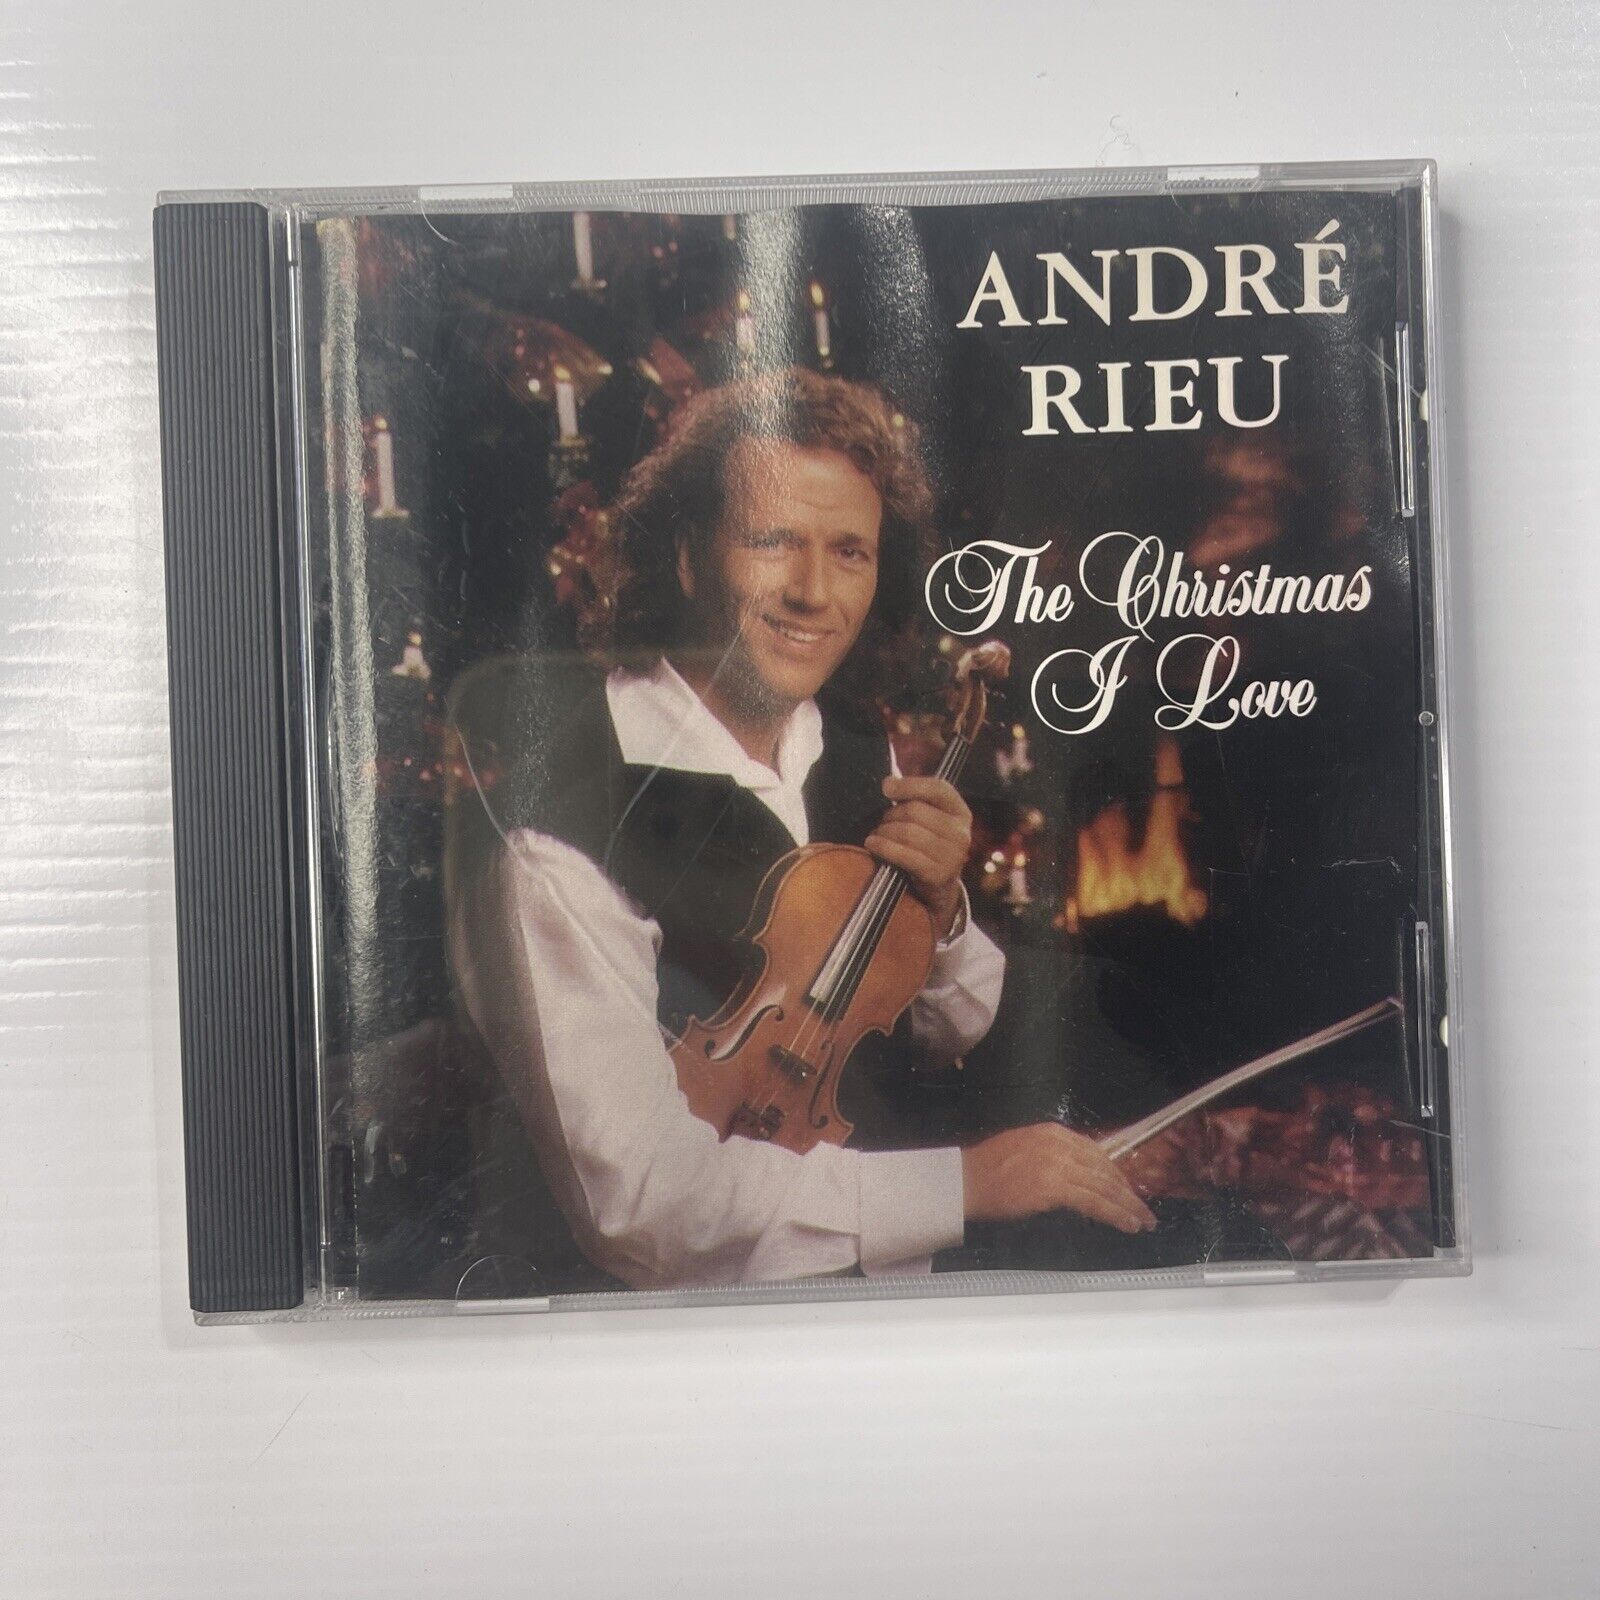 F CD Andre Rieu The Christmas I Love